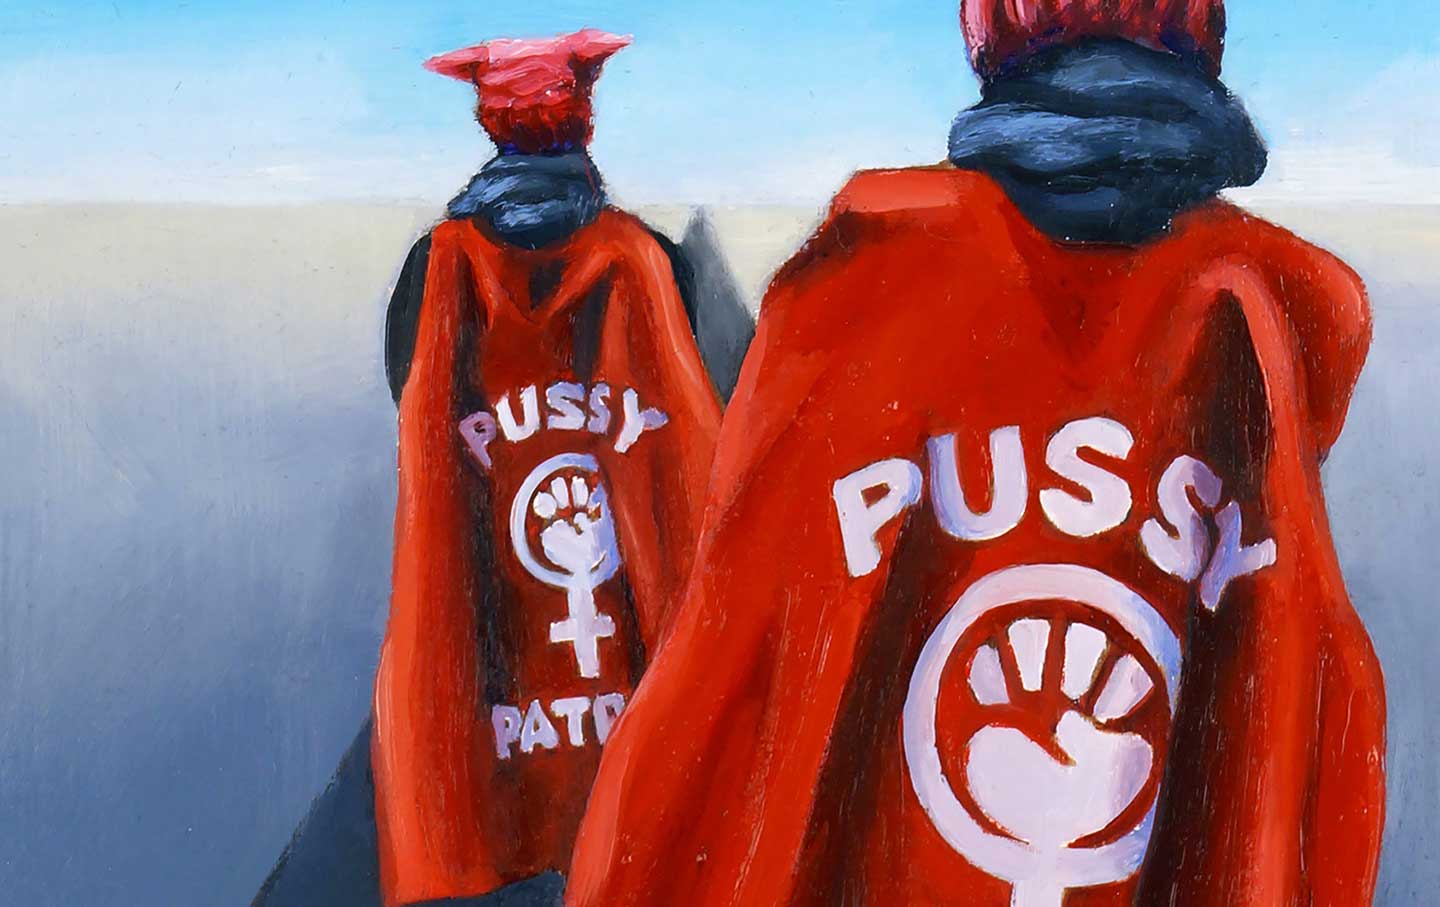 Pussy Patrol